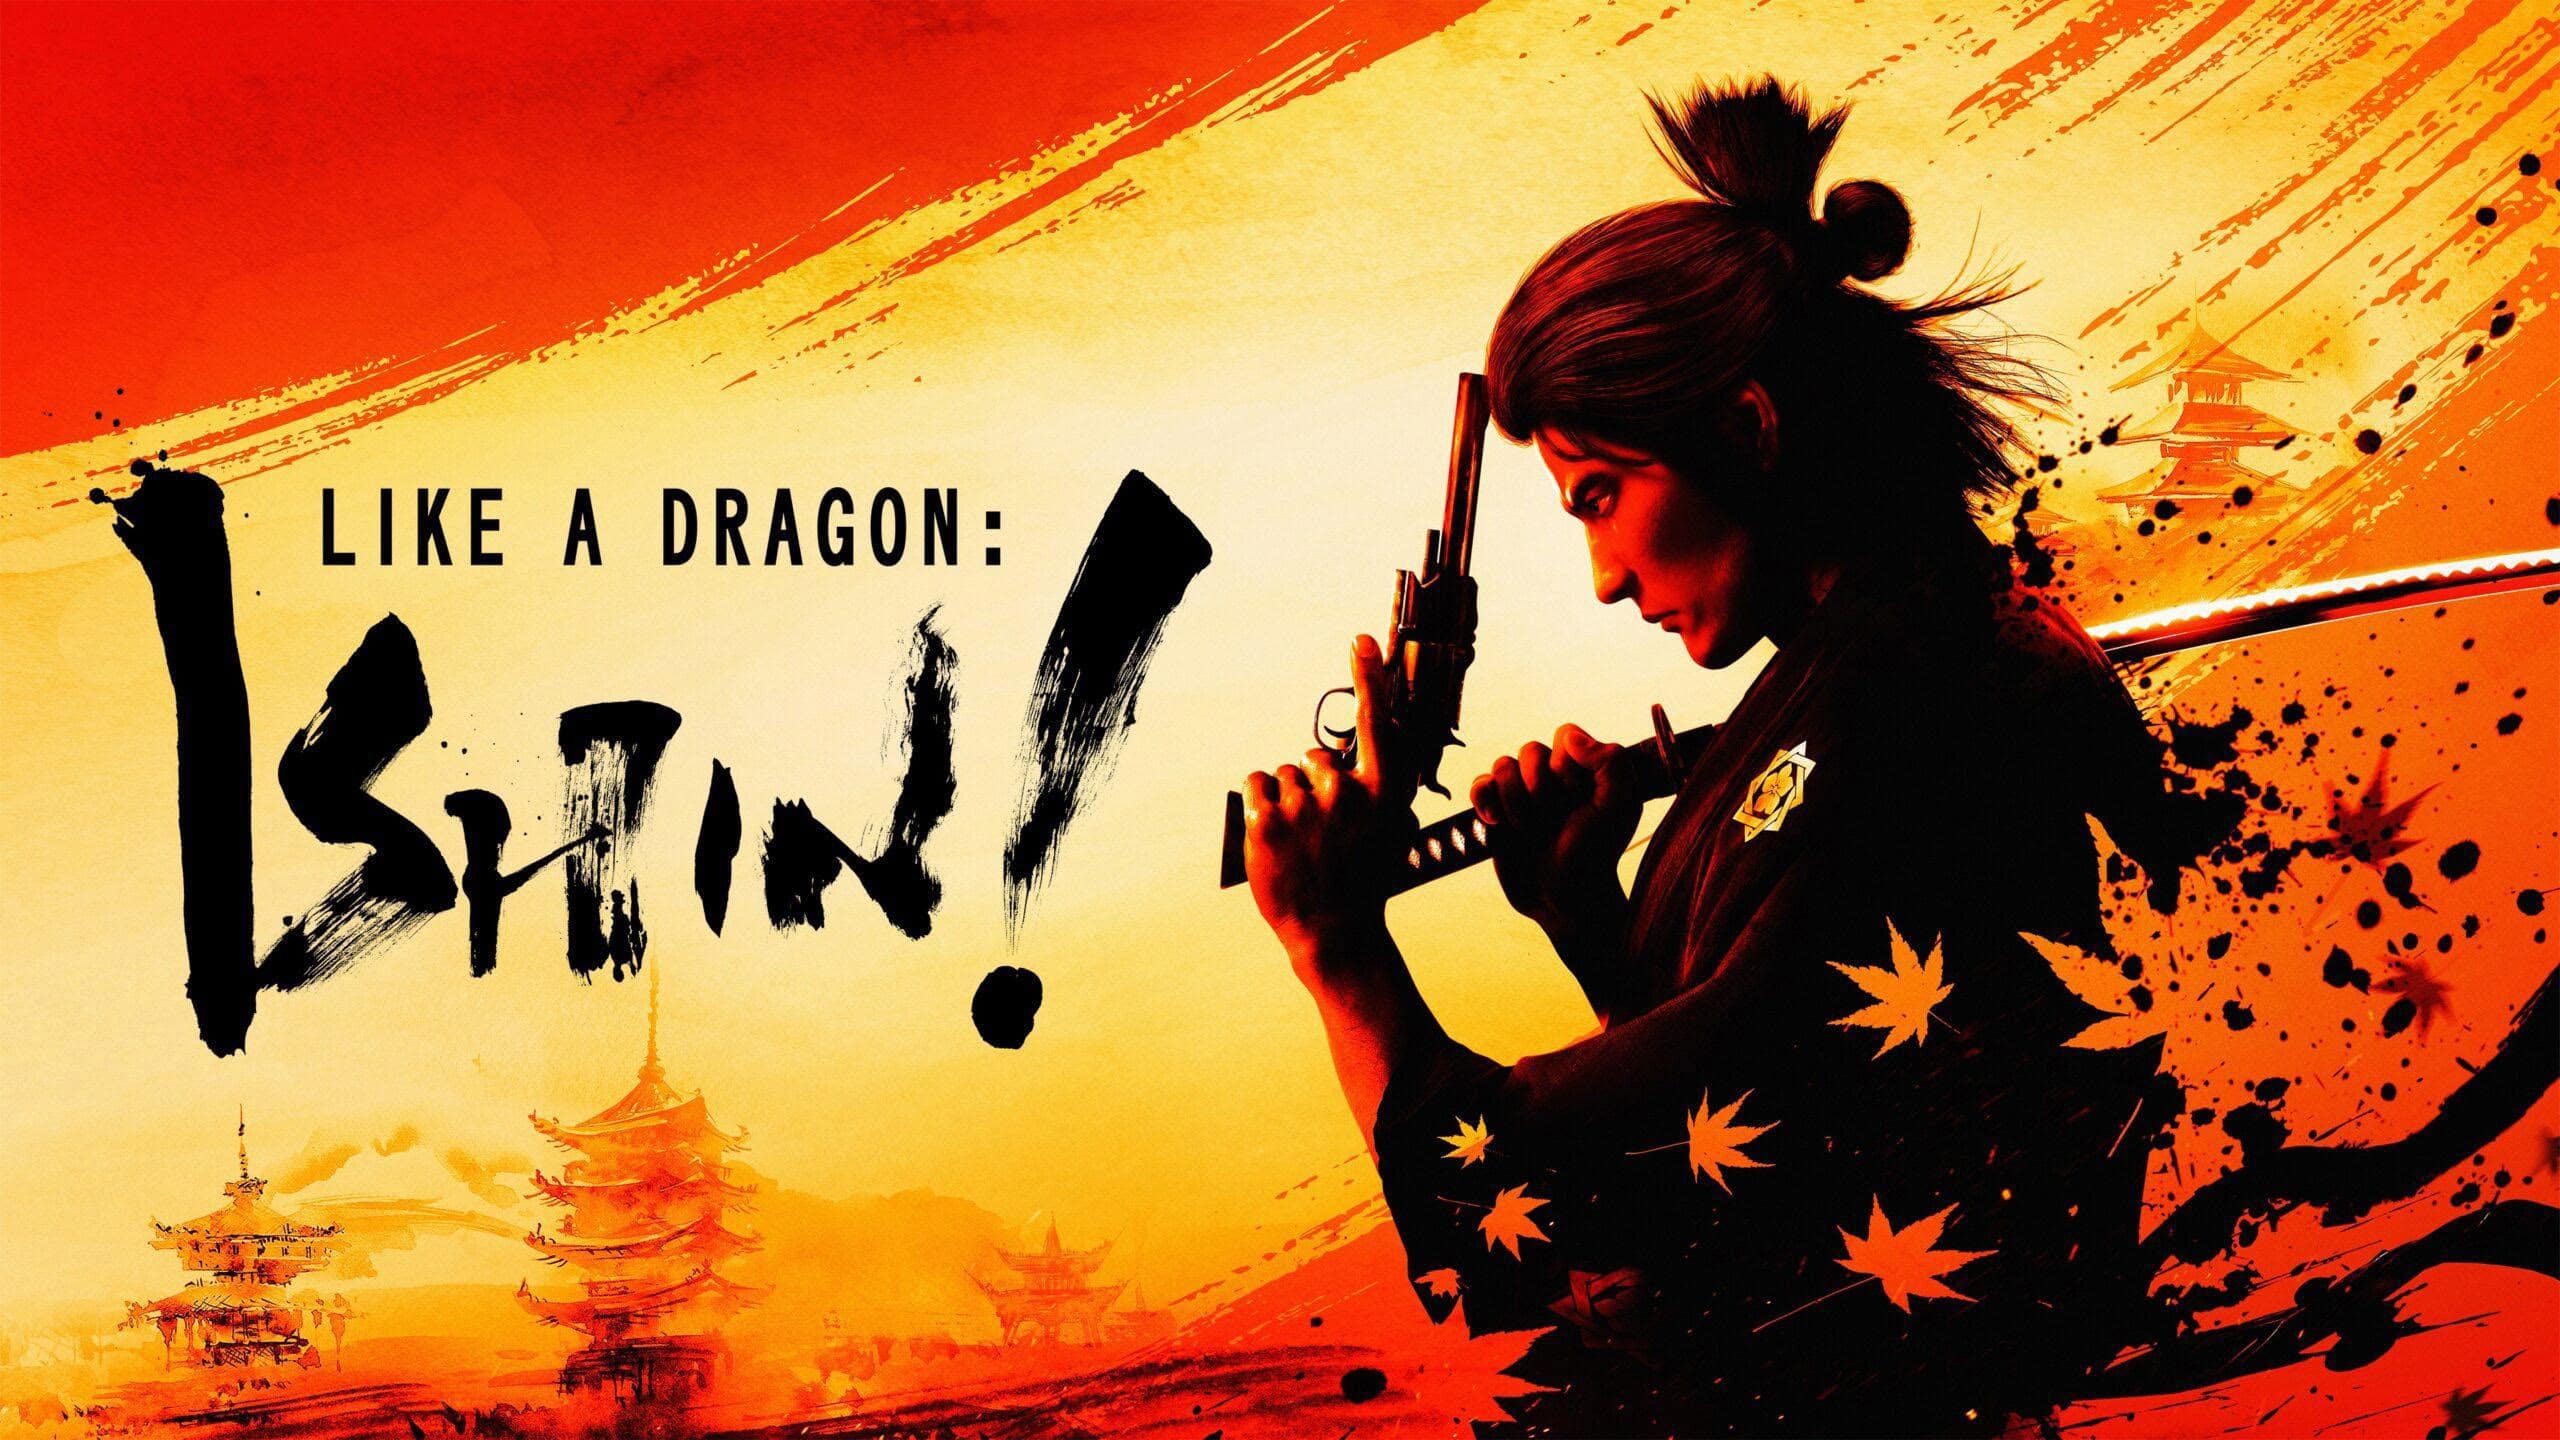 Like a Dragon: Ishin!  the new game in the Yakuza series